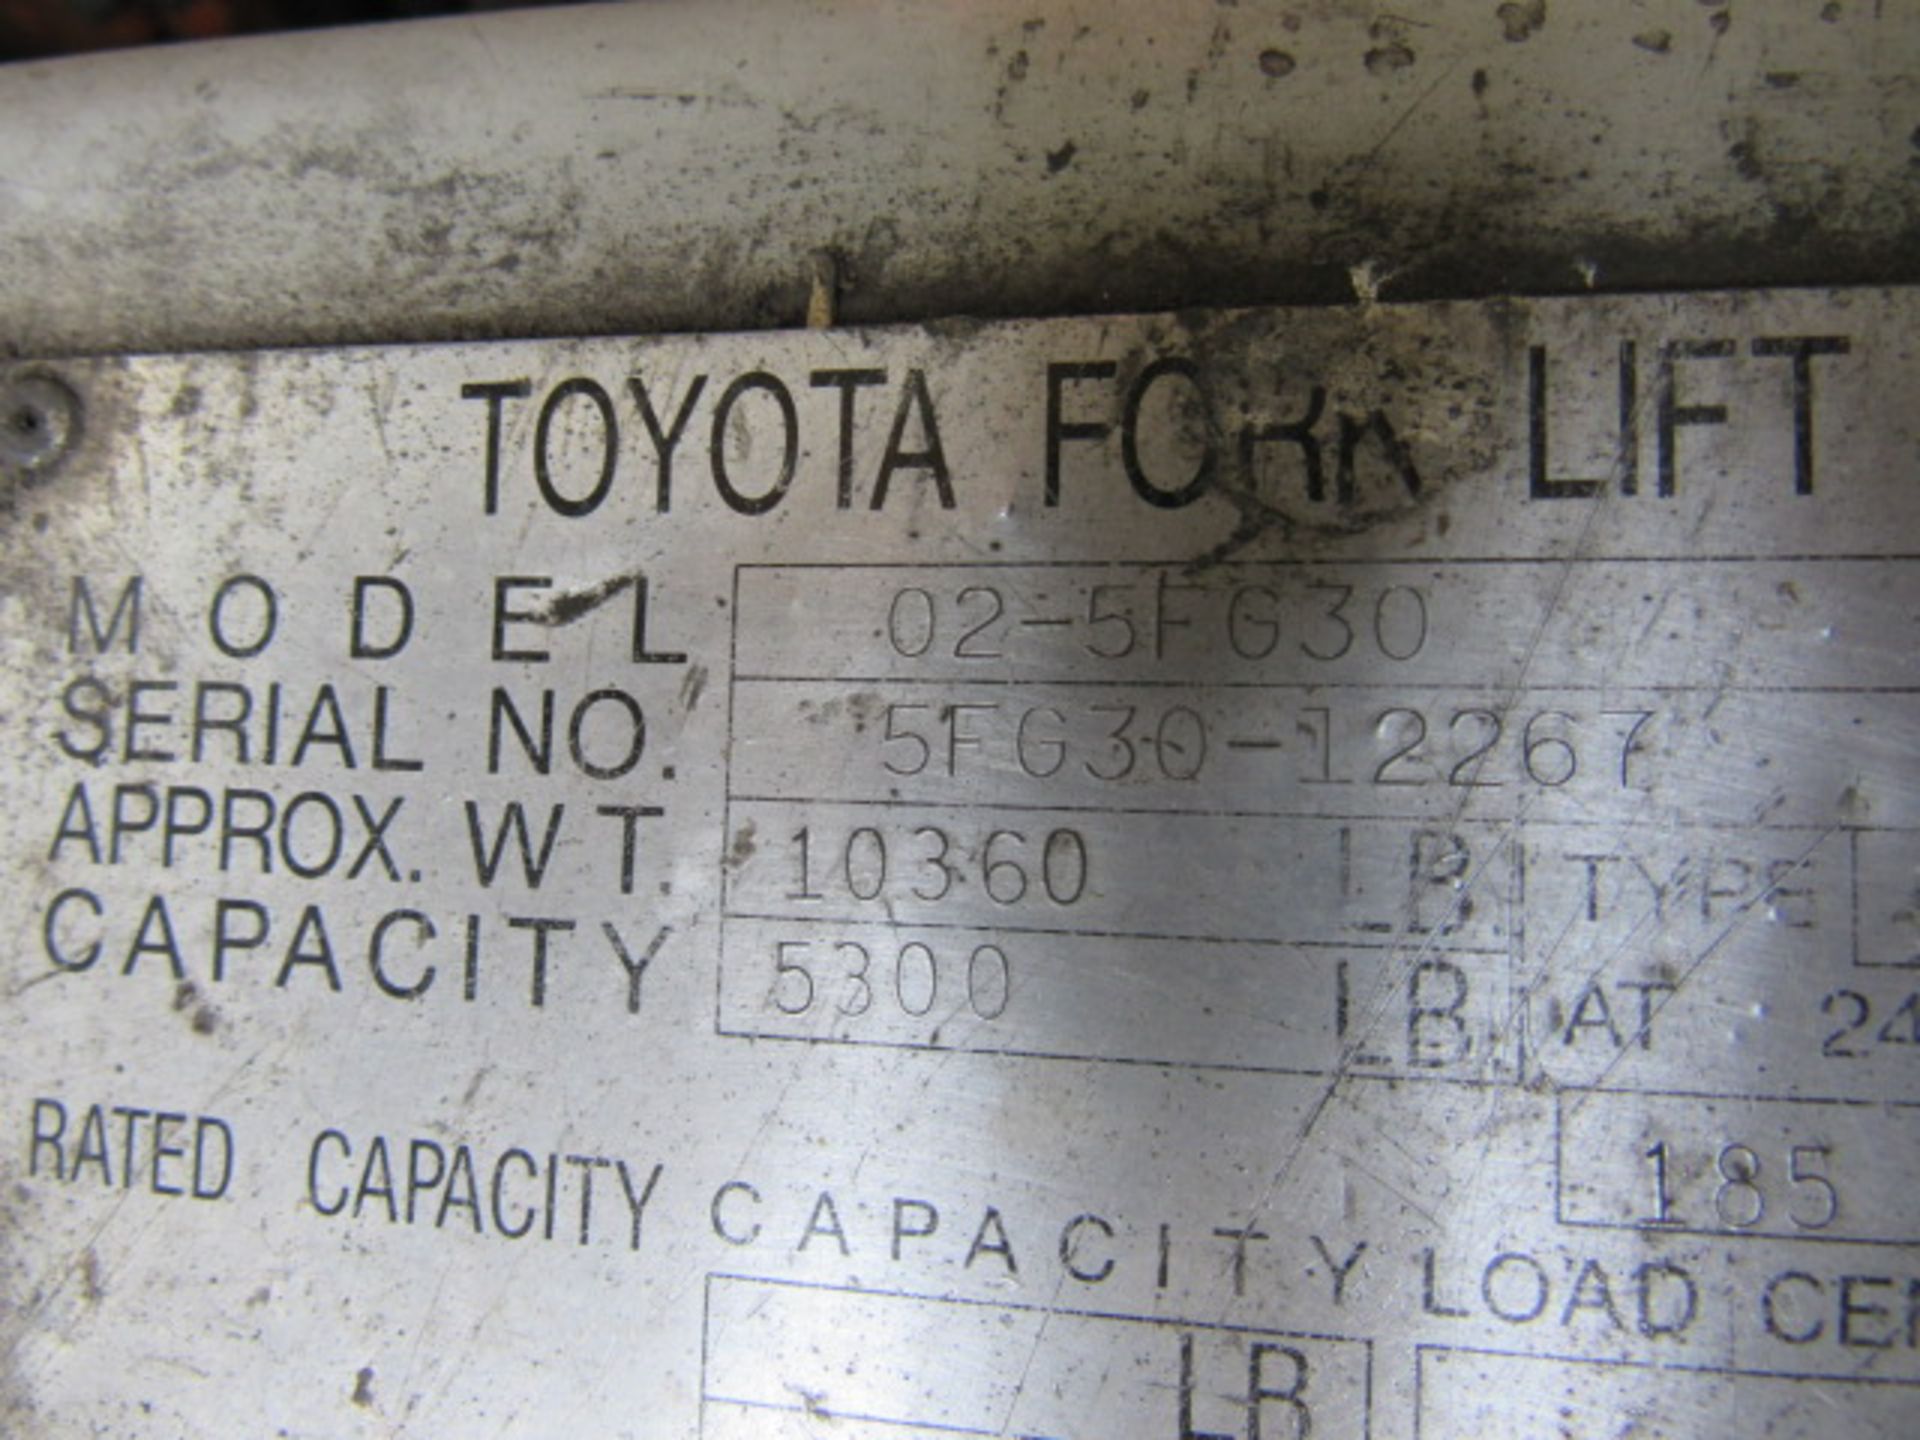 Toyota 025FG-30 5,300lb Capacity Outdoor LP Forklift - Bild 10 aus 10